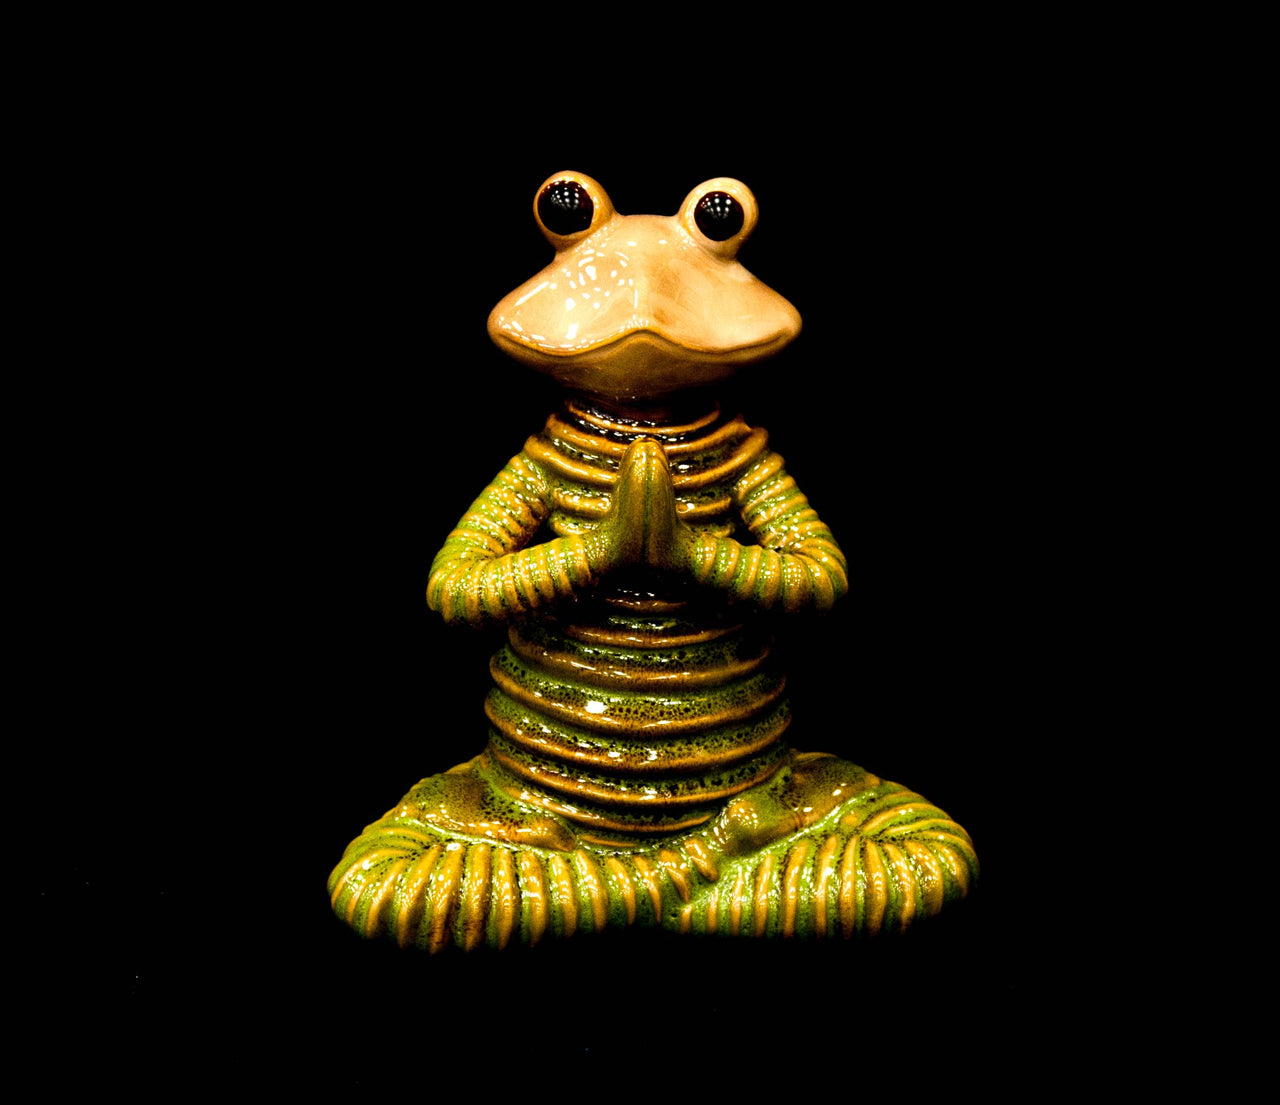 HCHD5088 - Yoga Frog Praying